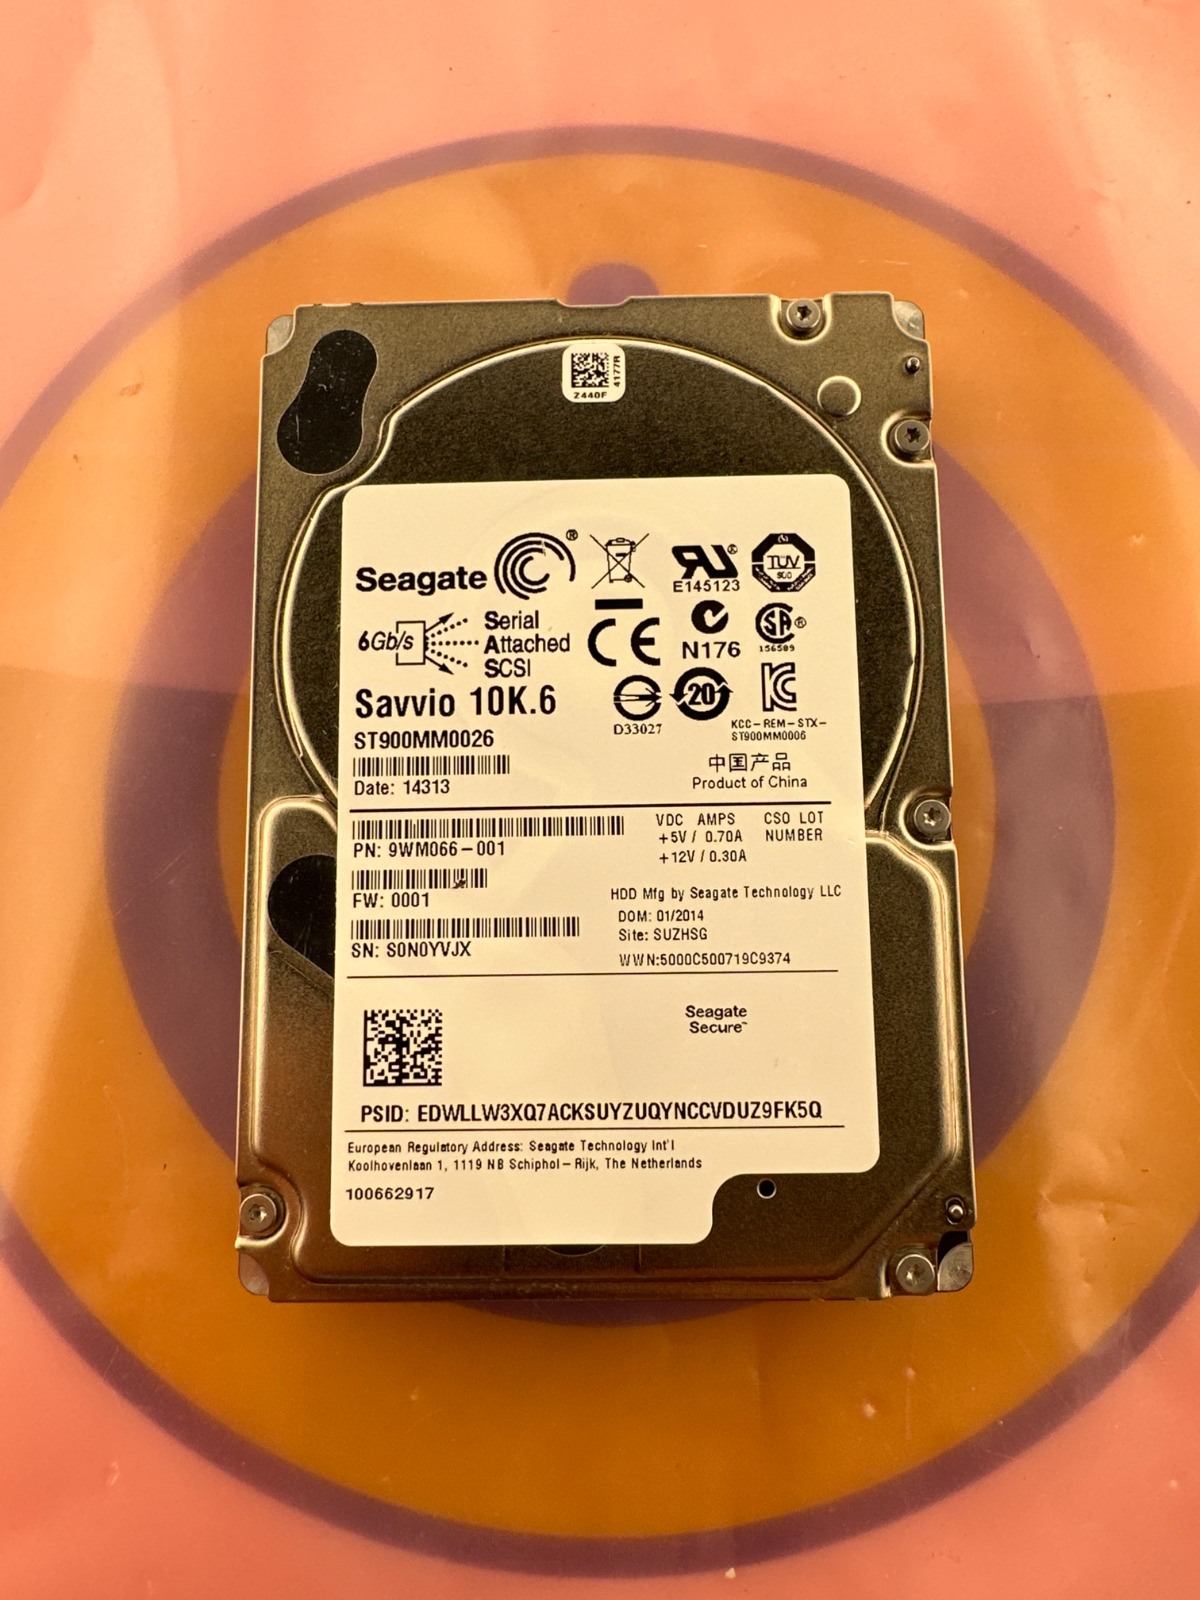 Seagate ST900MM0026 SAVIO 900GB 10K SAS 2.5 Internal SERVER Hard Drive 512B